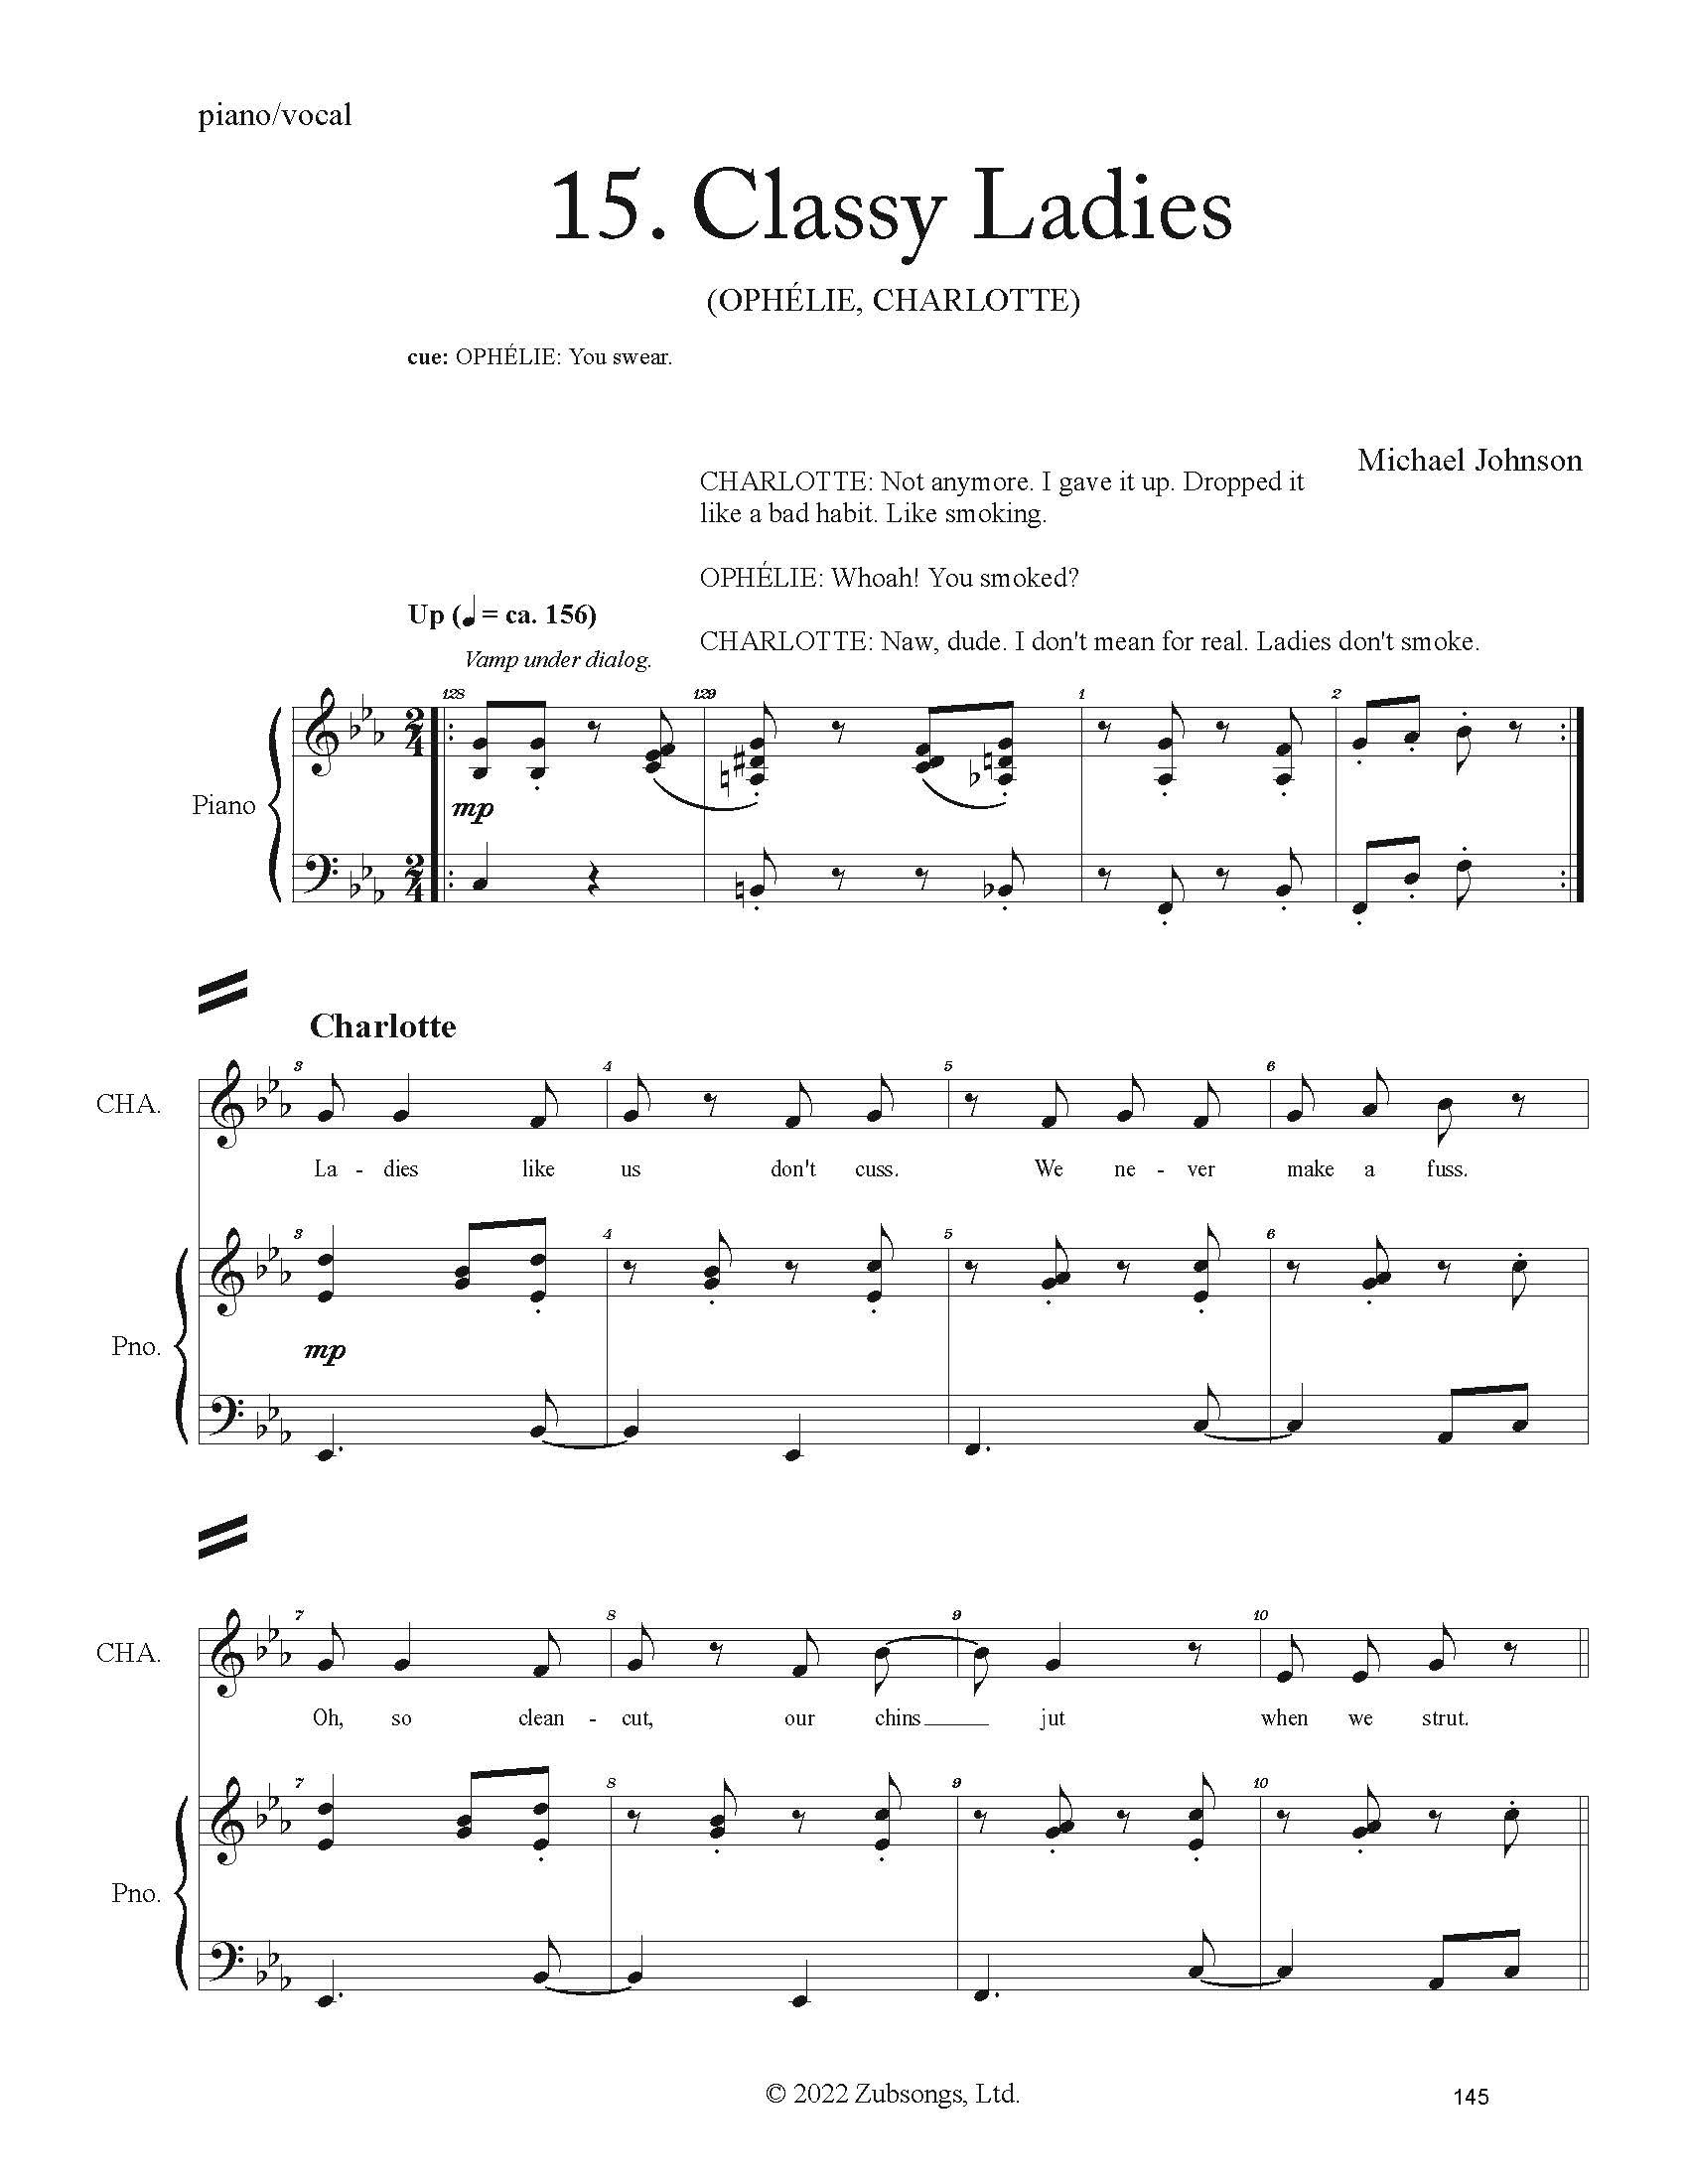 FULL PIANO VOCAL SCORE DRAFT 1 - Score_Page_145.jpg